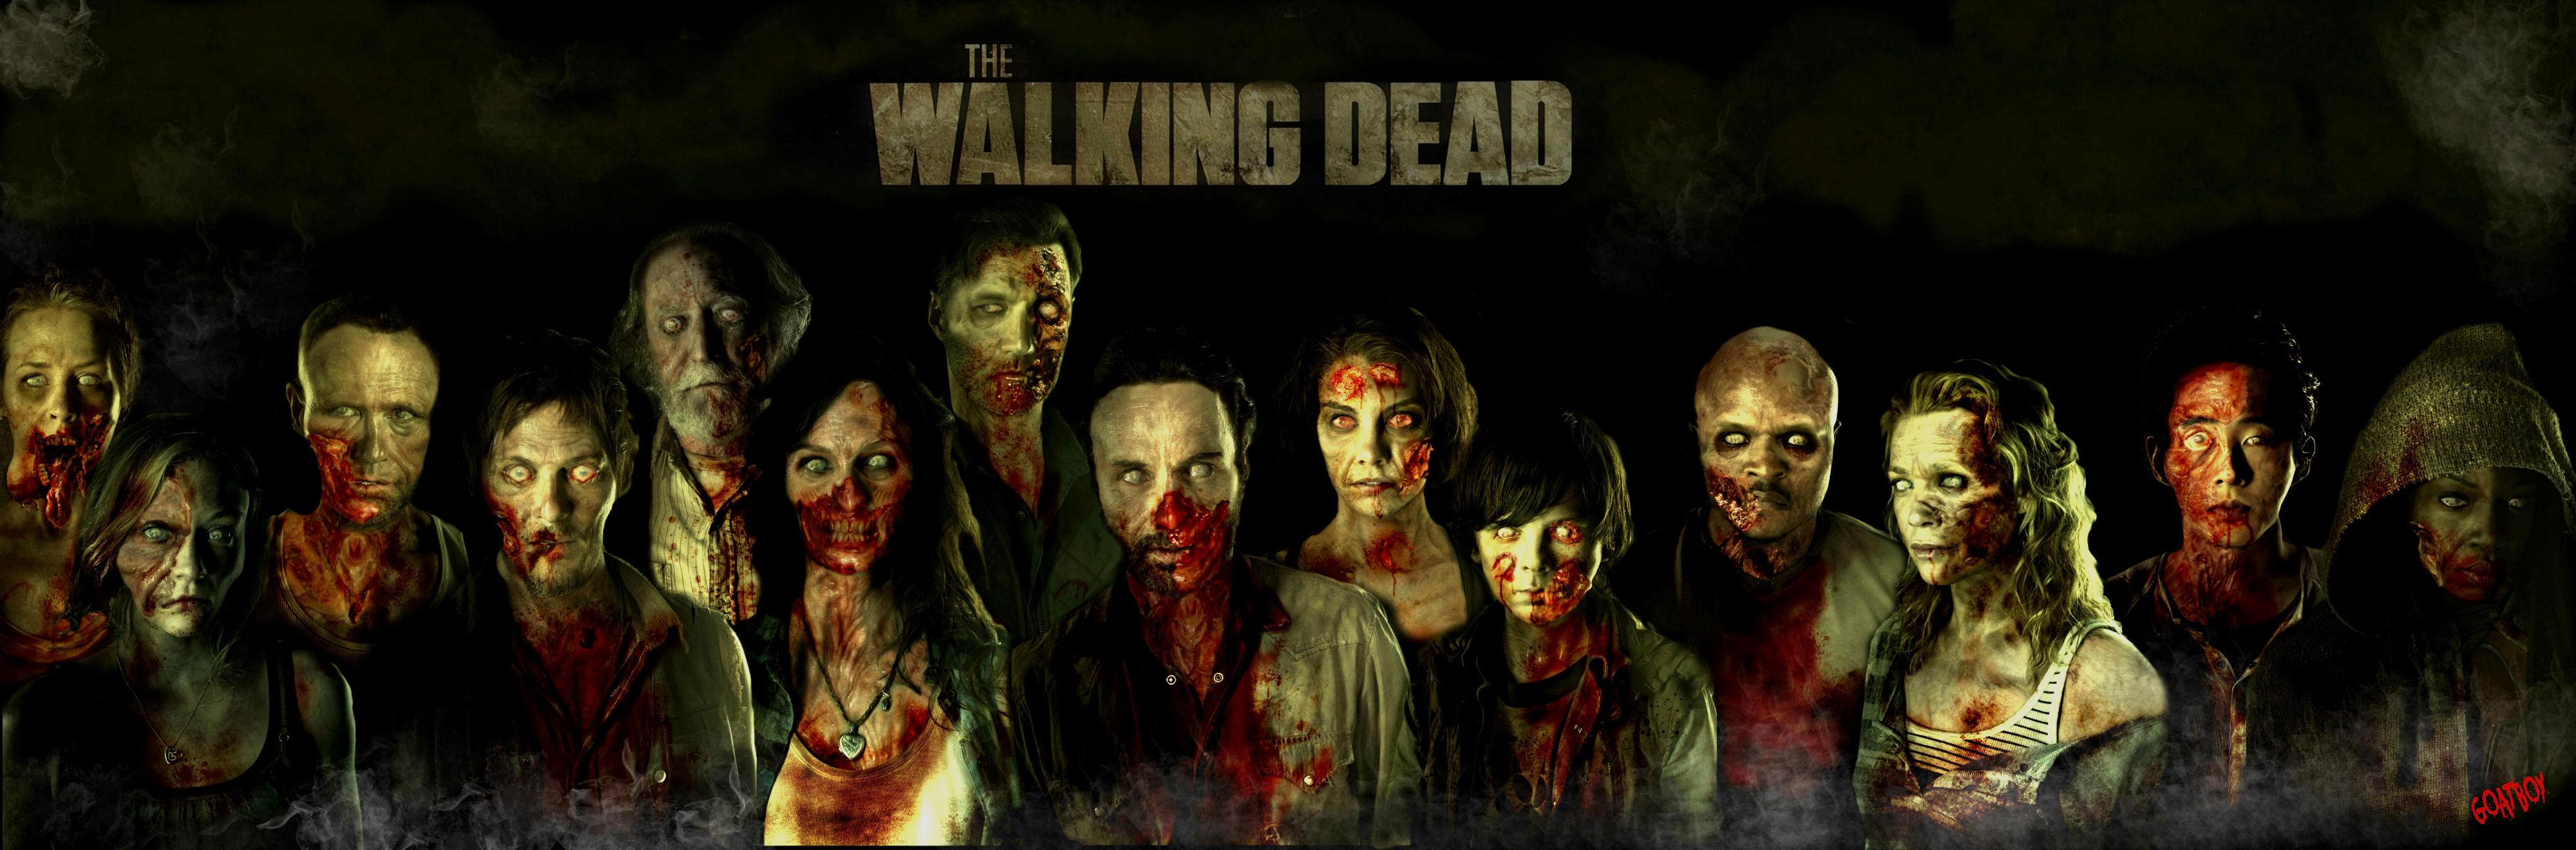 Walking Dead Wallpaper Beautiful K9N » WALLPAPERUN.COM